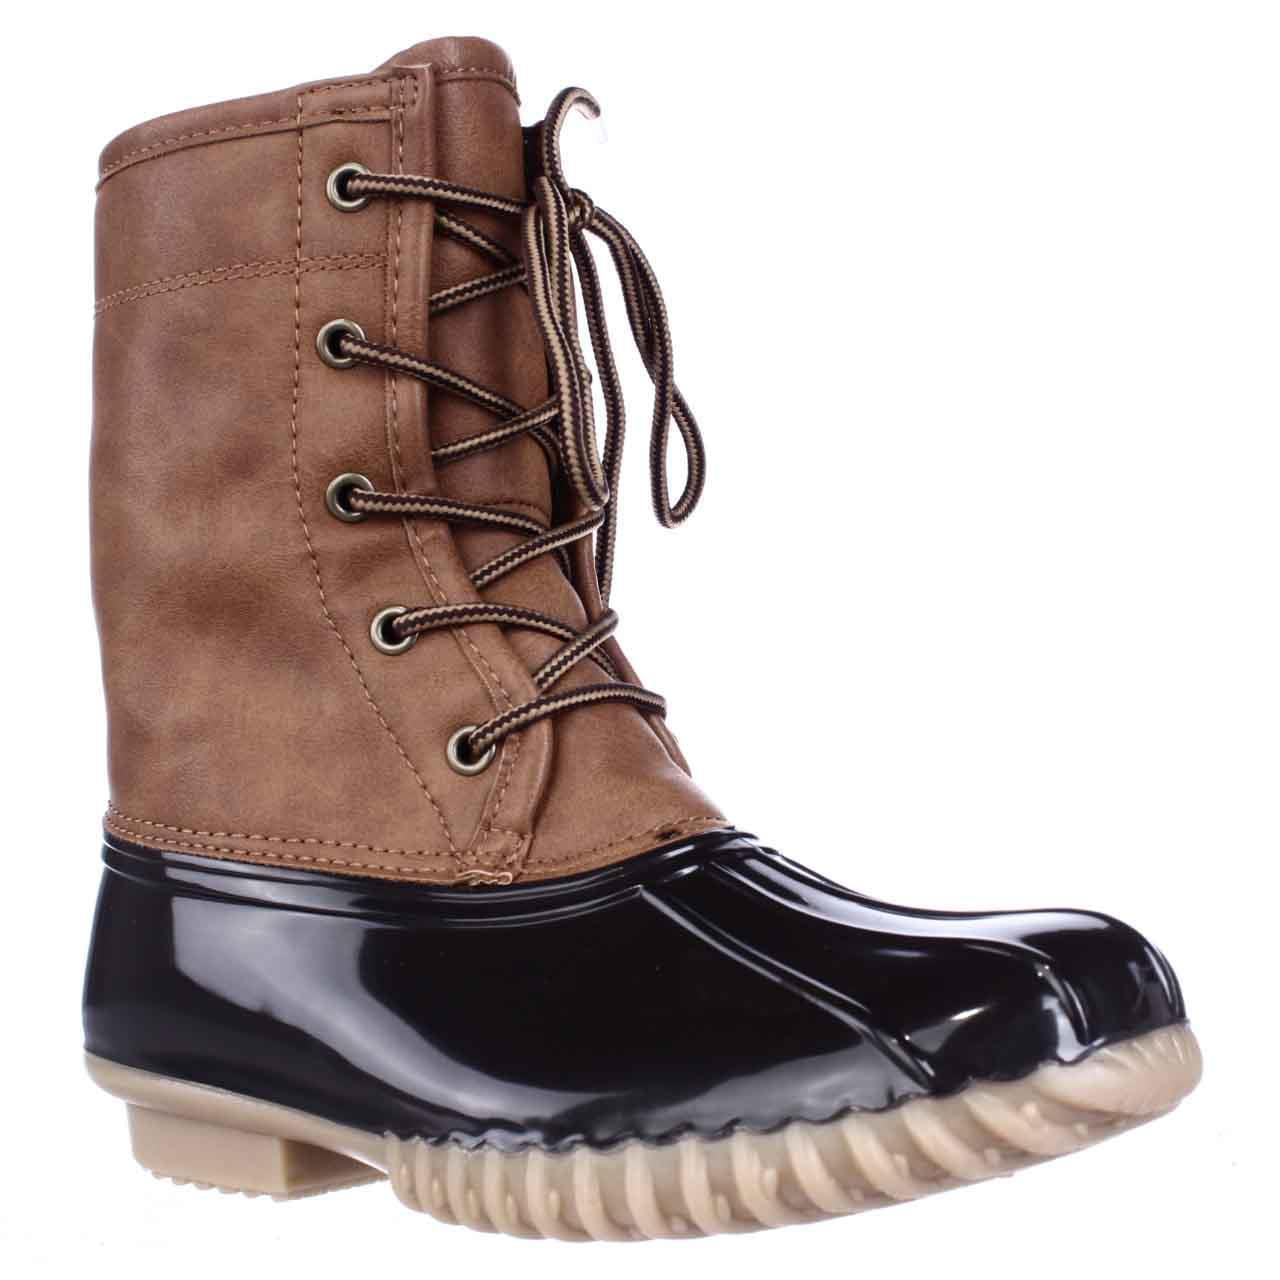 The Original Duck Boot Womens the Orginal Duck Boot Arianna Flannel Lined Boots Tan/Brown 7.5